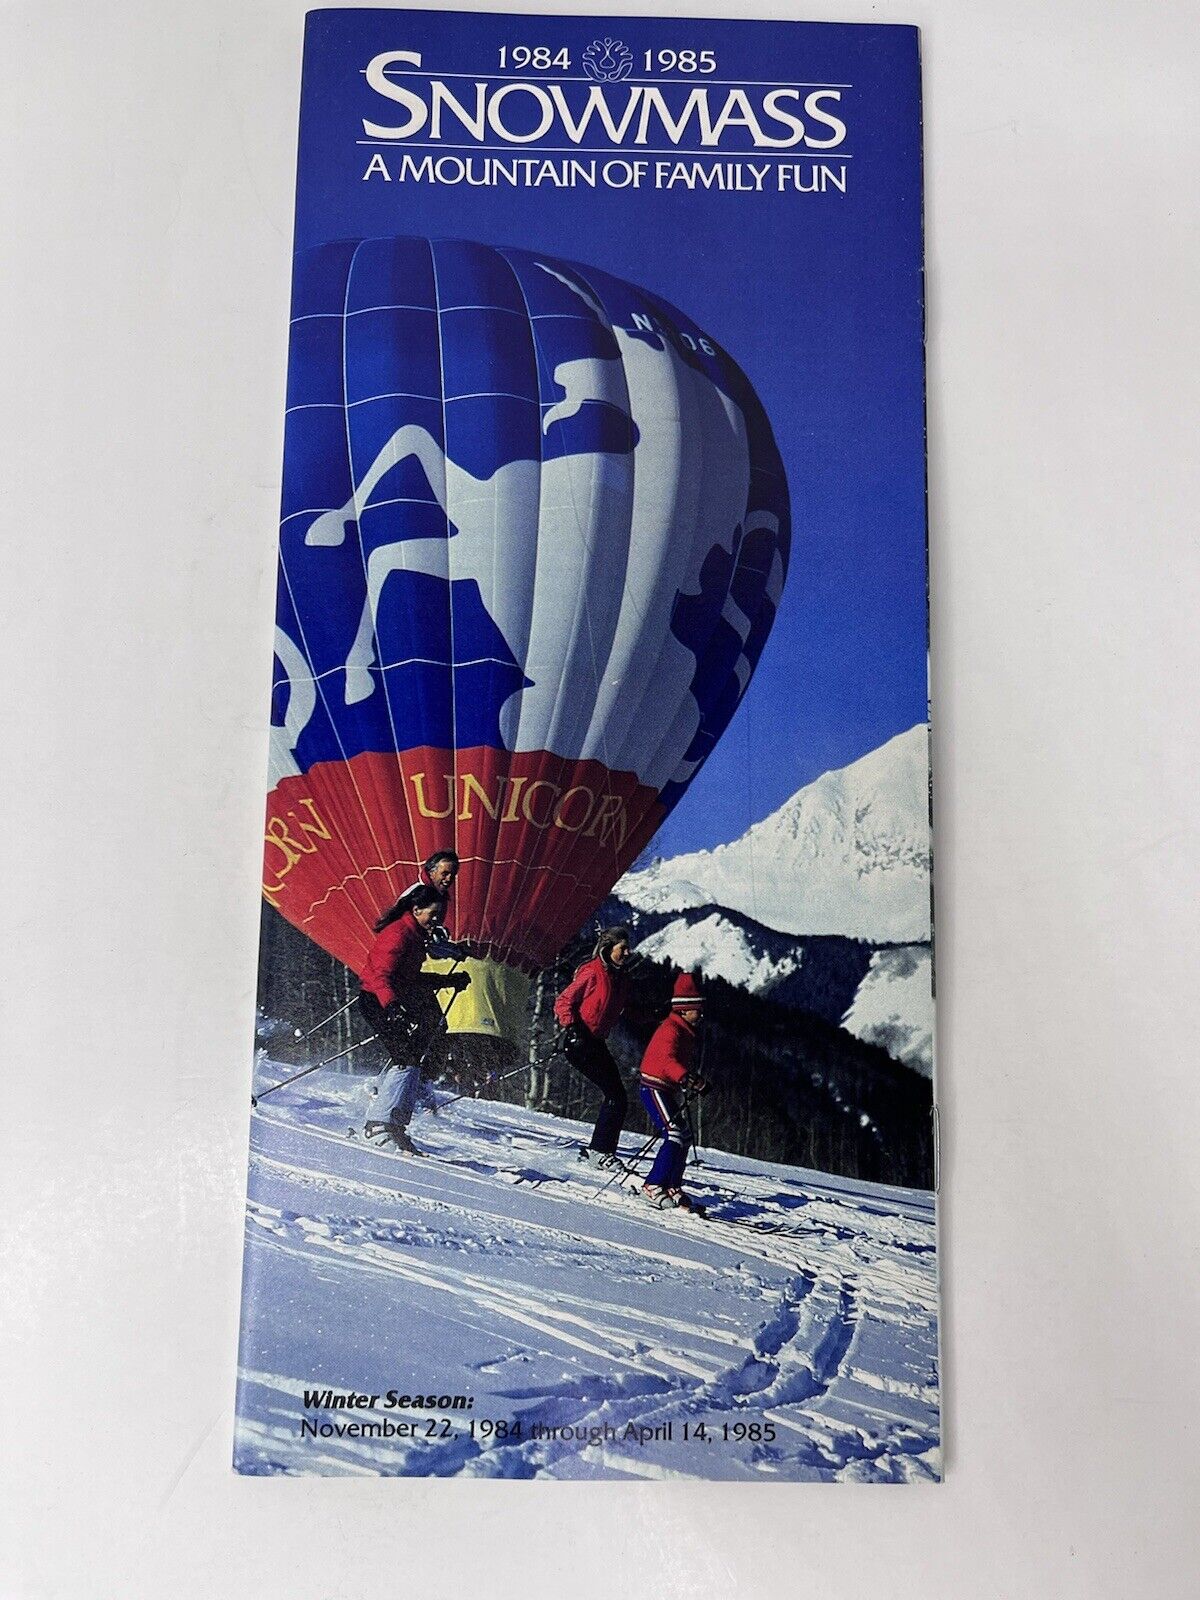 Snowmass 1984/1985 Ski Brochure Travel Guide Ephemera